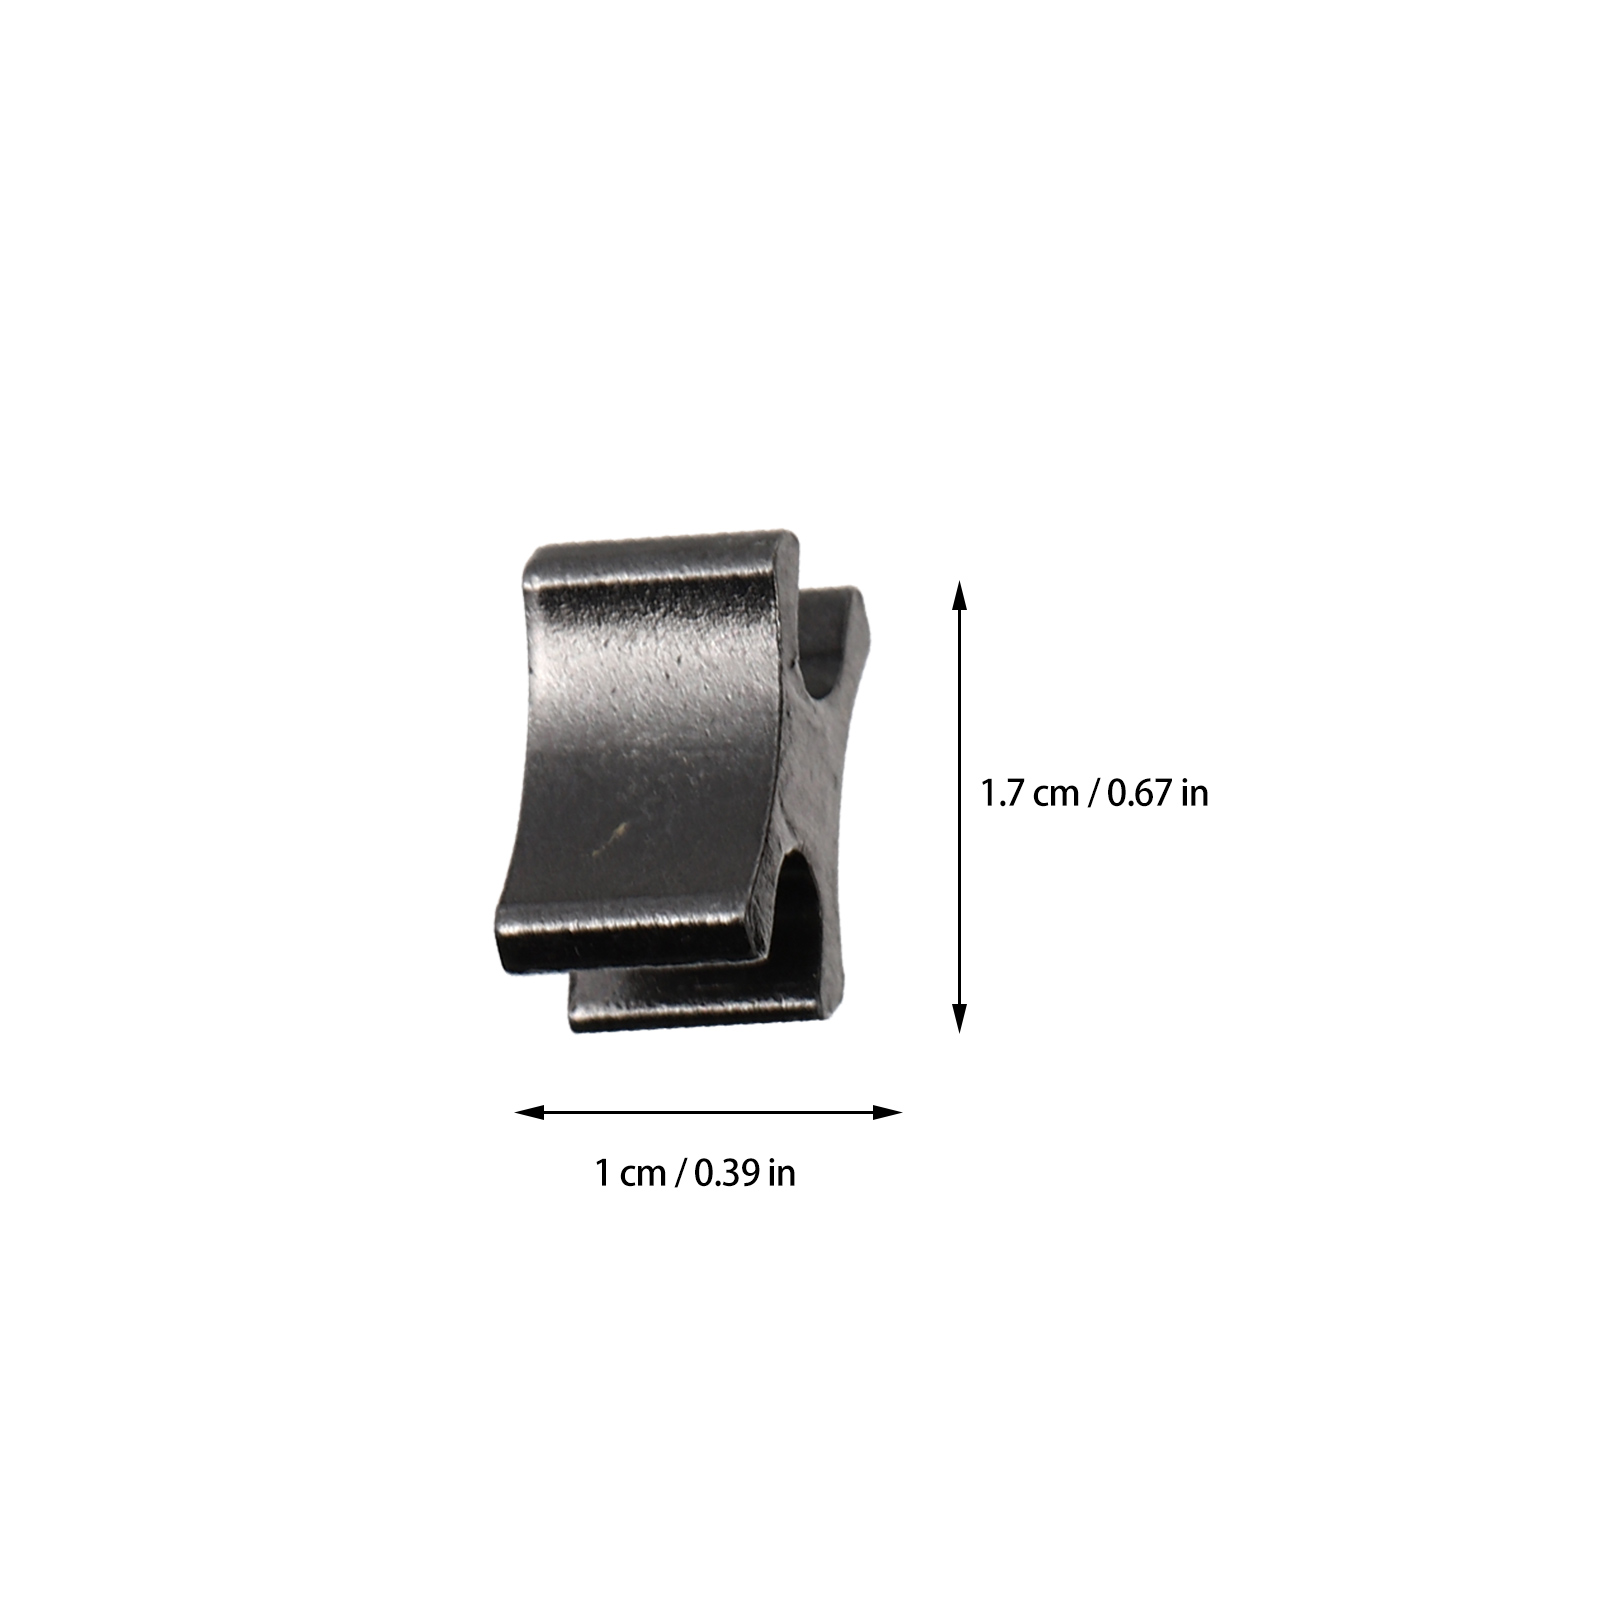 24 Set Metal Zipper Head Sliders Retainer Insertion Pin Zipper Stop Accessories Plug Zipper Repair Kit for Coat Home DIY (Mixed Color, Size 3/5/8/10)